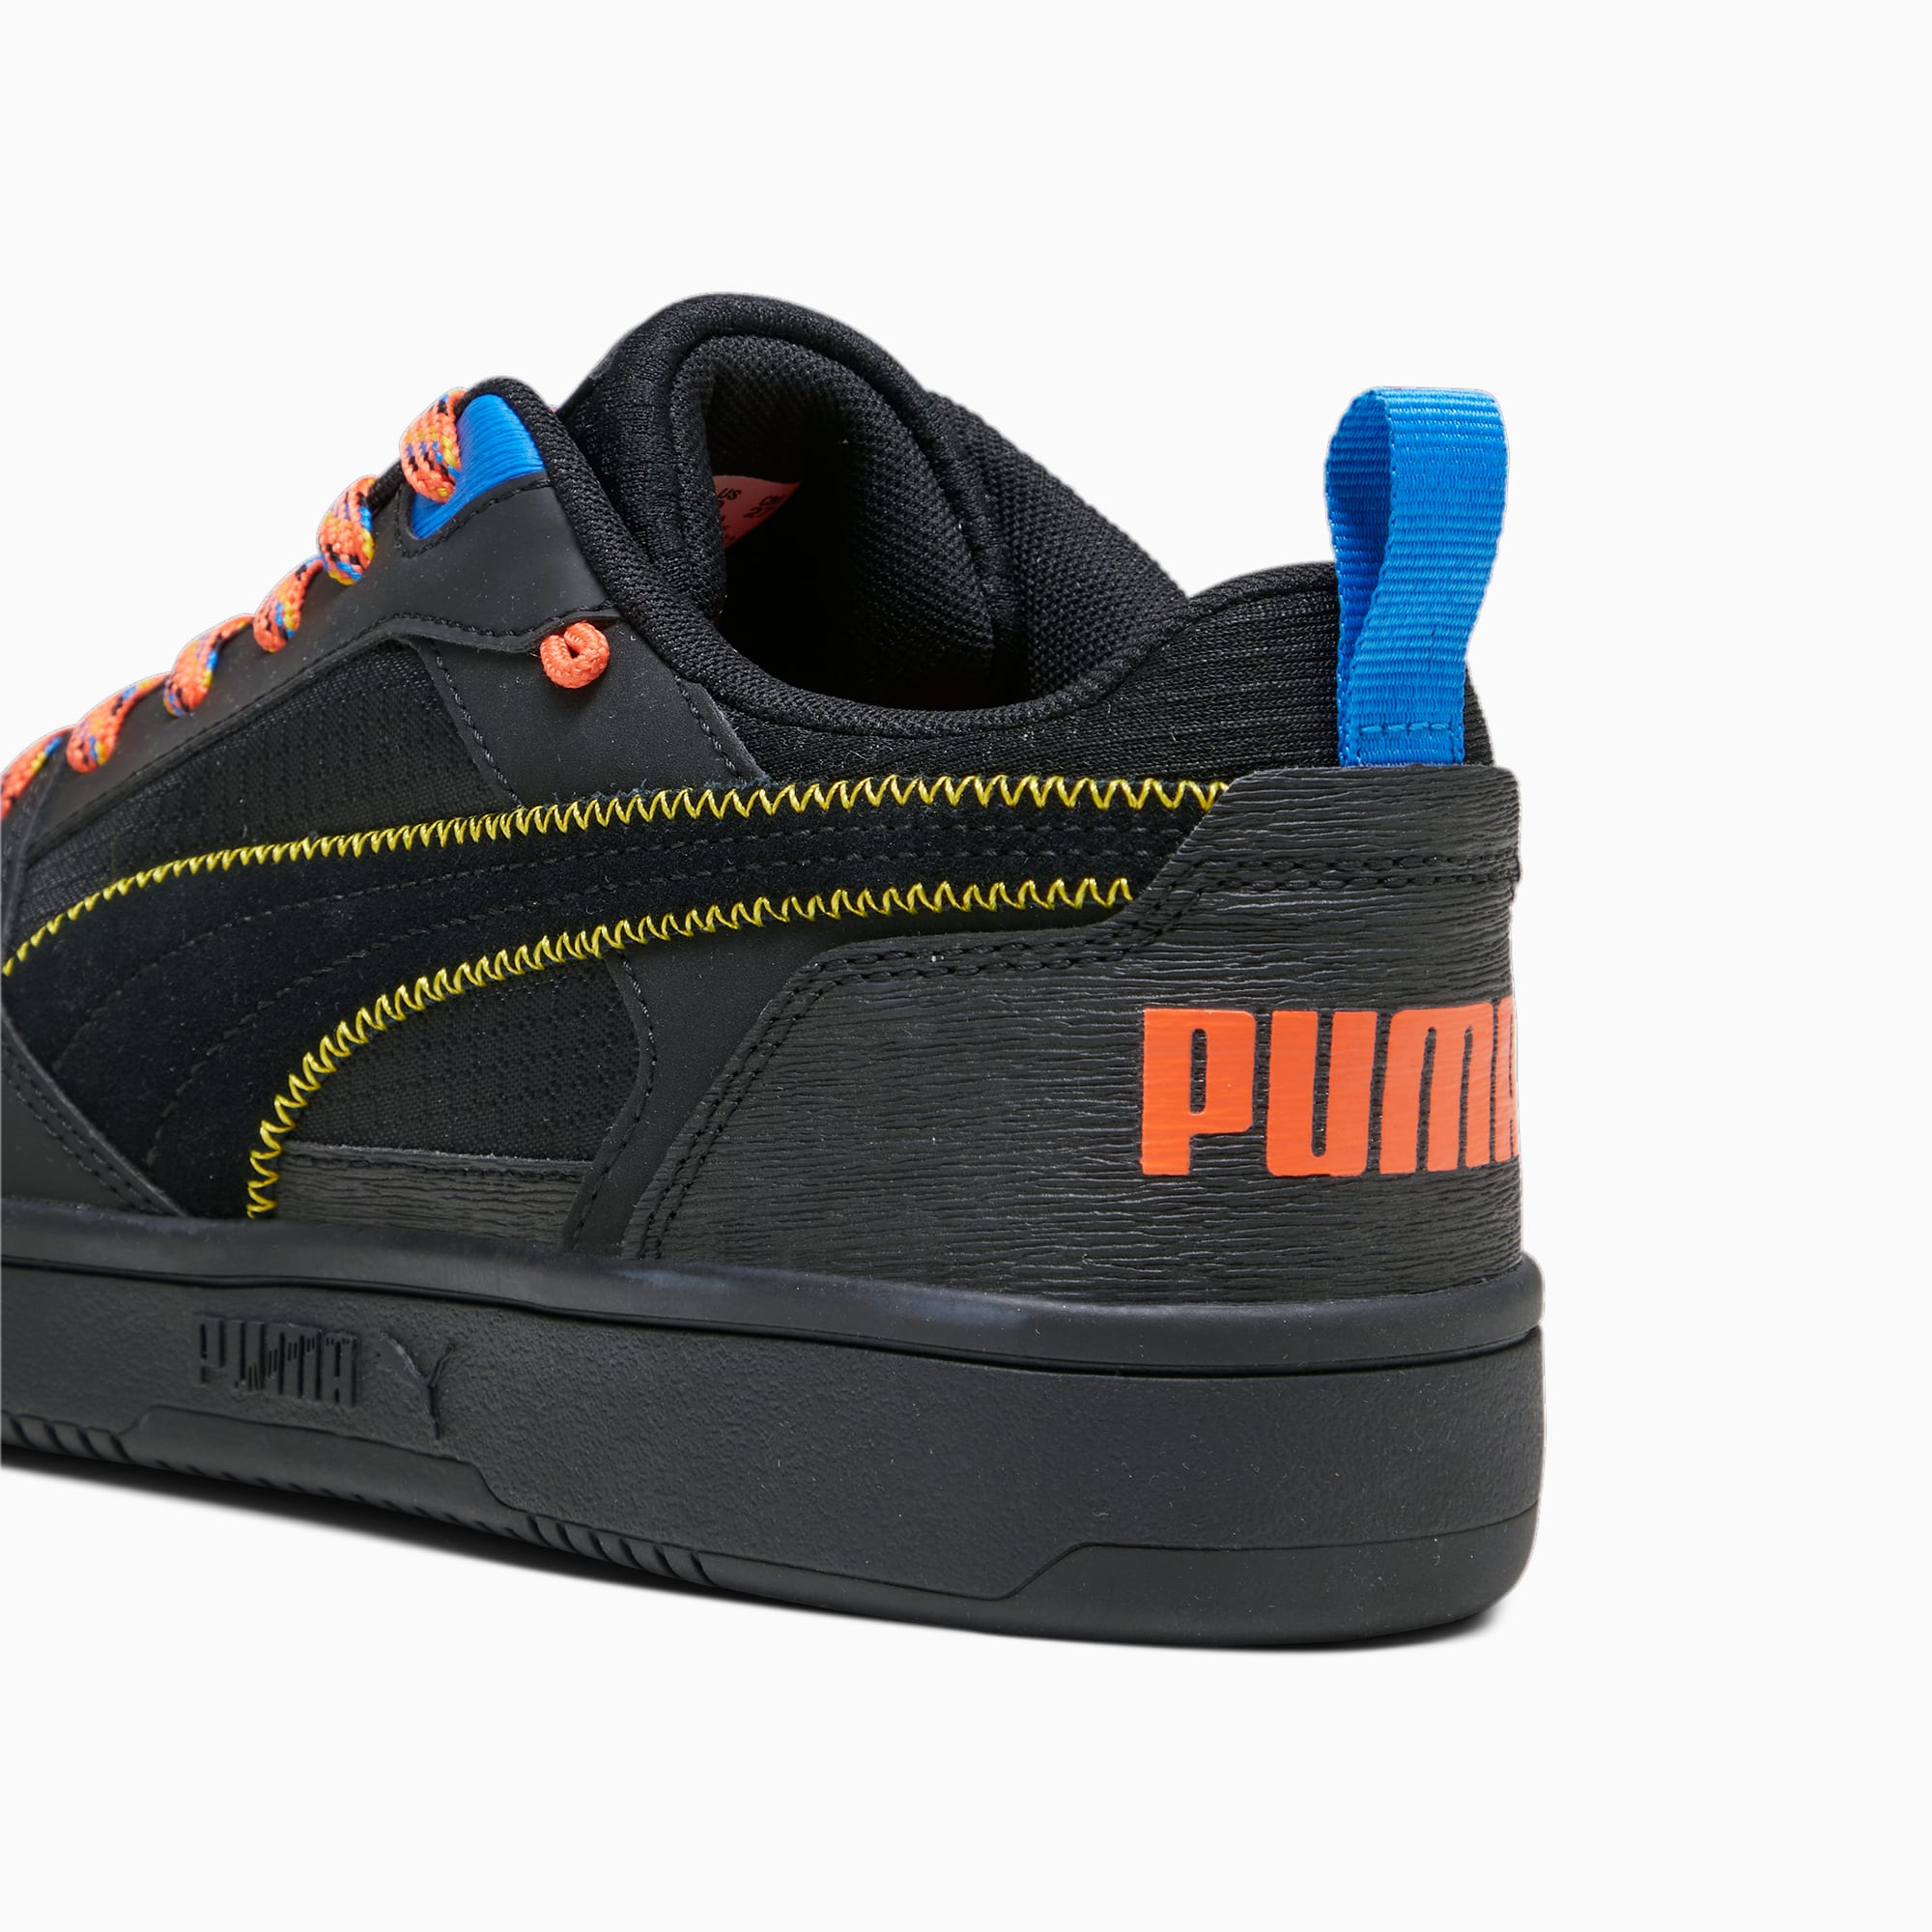 Rebound v6 Low Open Road Men's Sneakers | PUMA